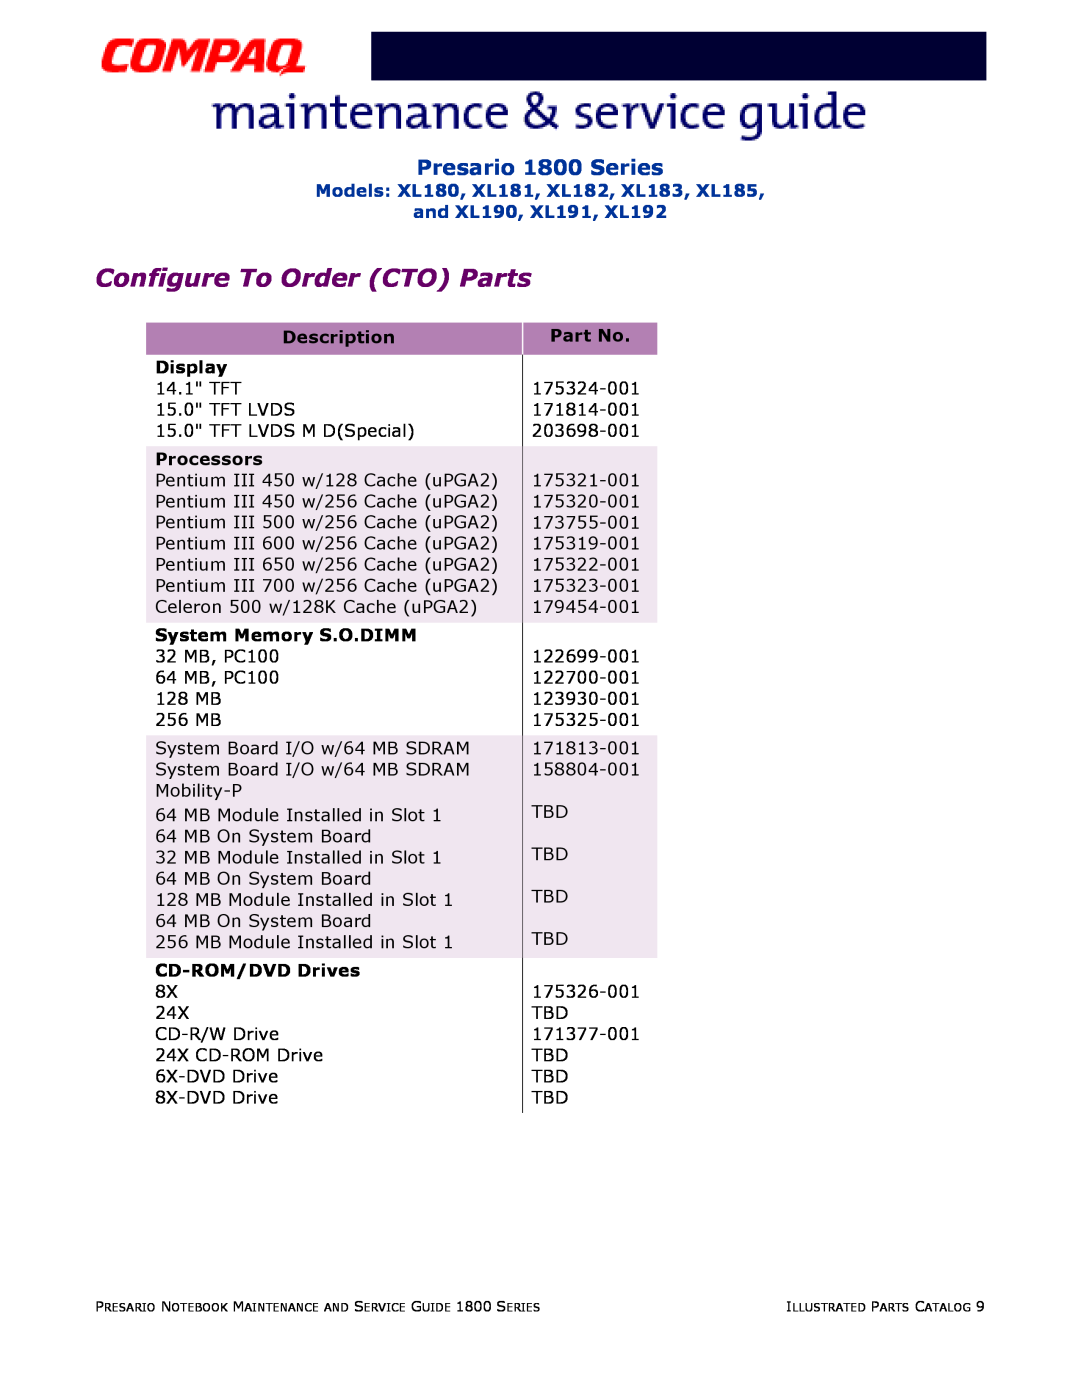 Compaq XL185 Configure To Order CTO Parts, Presario 1800 Series, Description Display, Processors, System Memory S.O.DIMM 